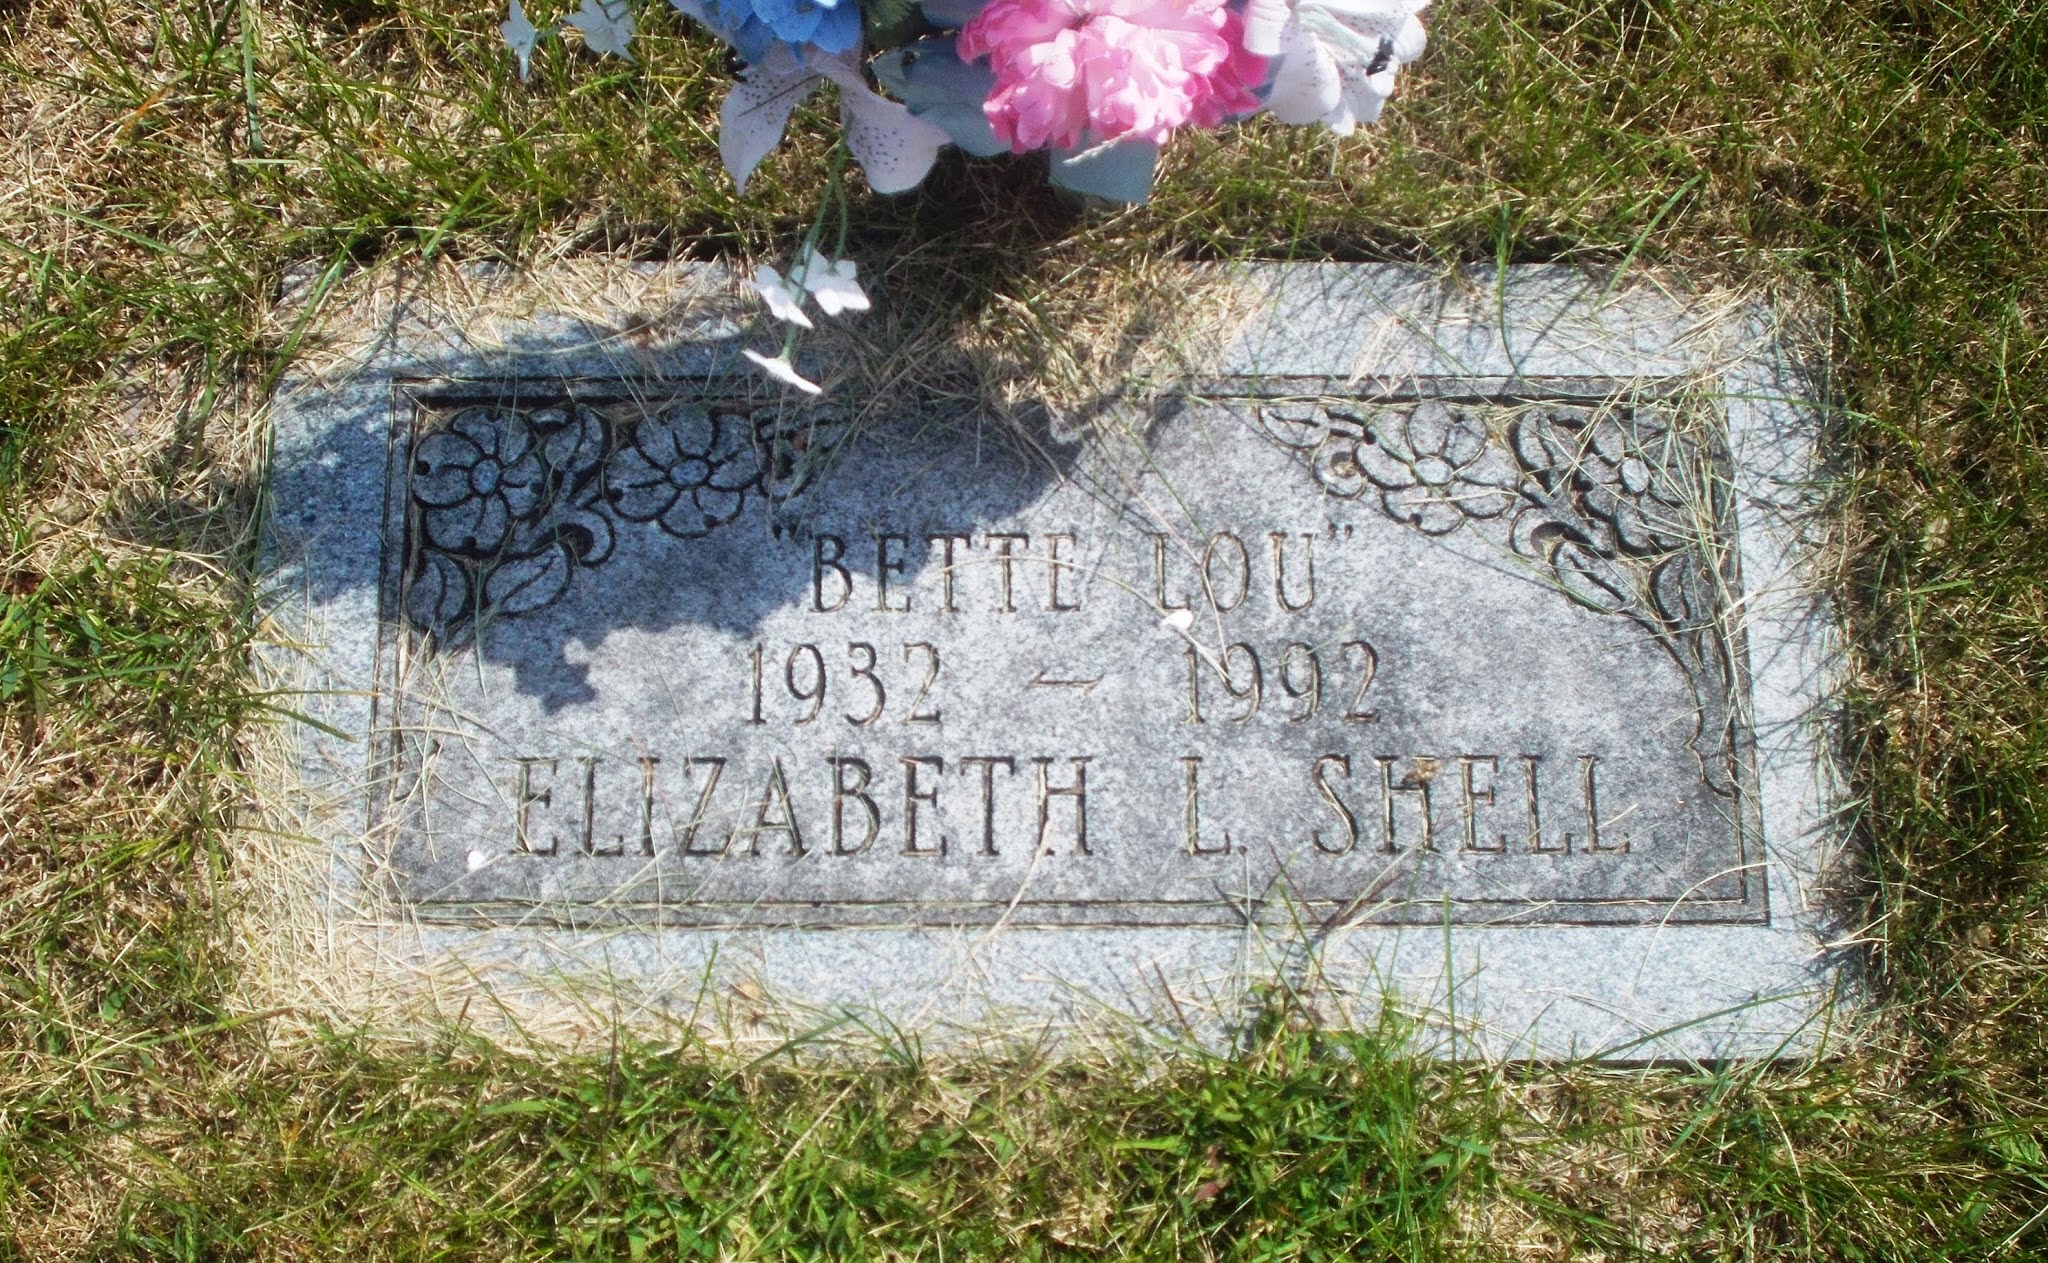 Elizabeth L "Bette Lou" Shell